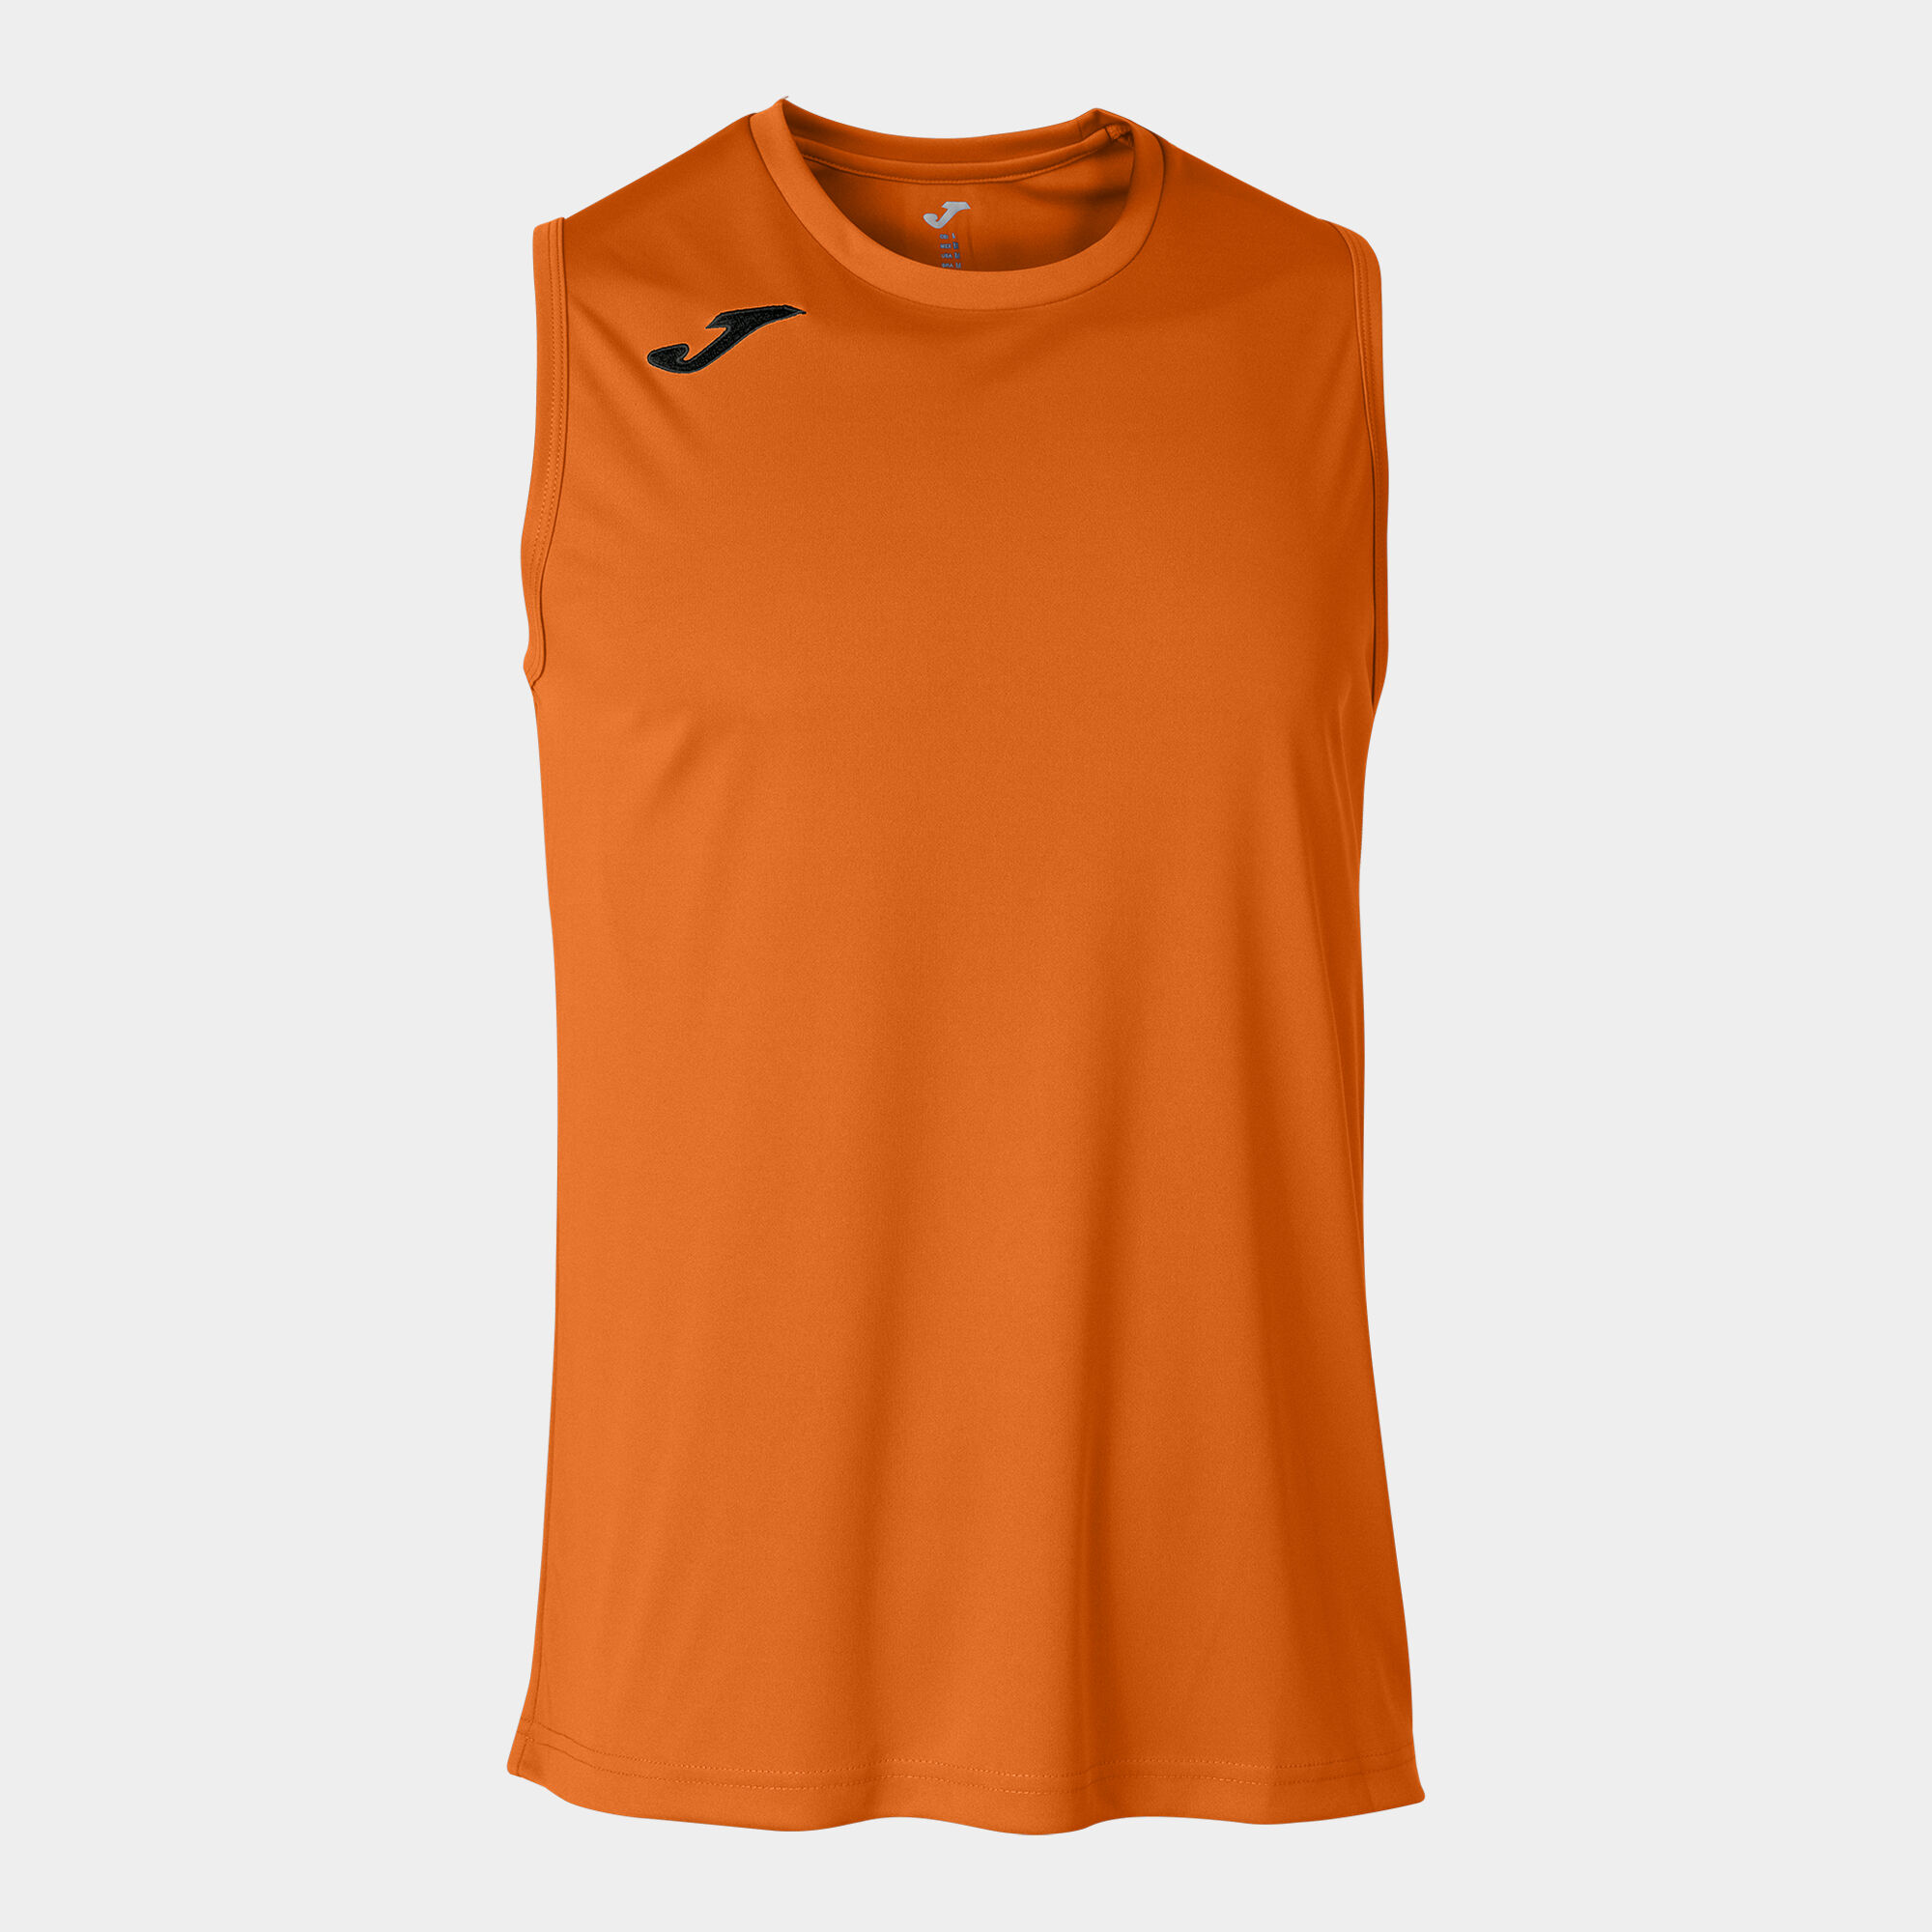 Camiseta sin mangas hombre Combi Basket naranja